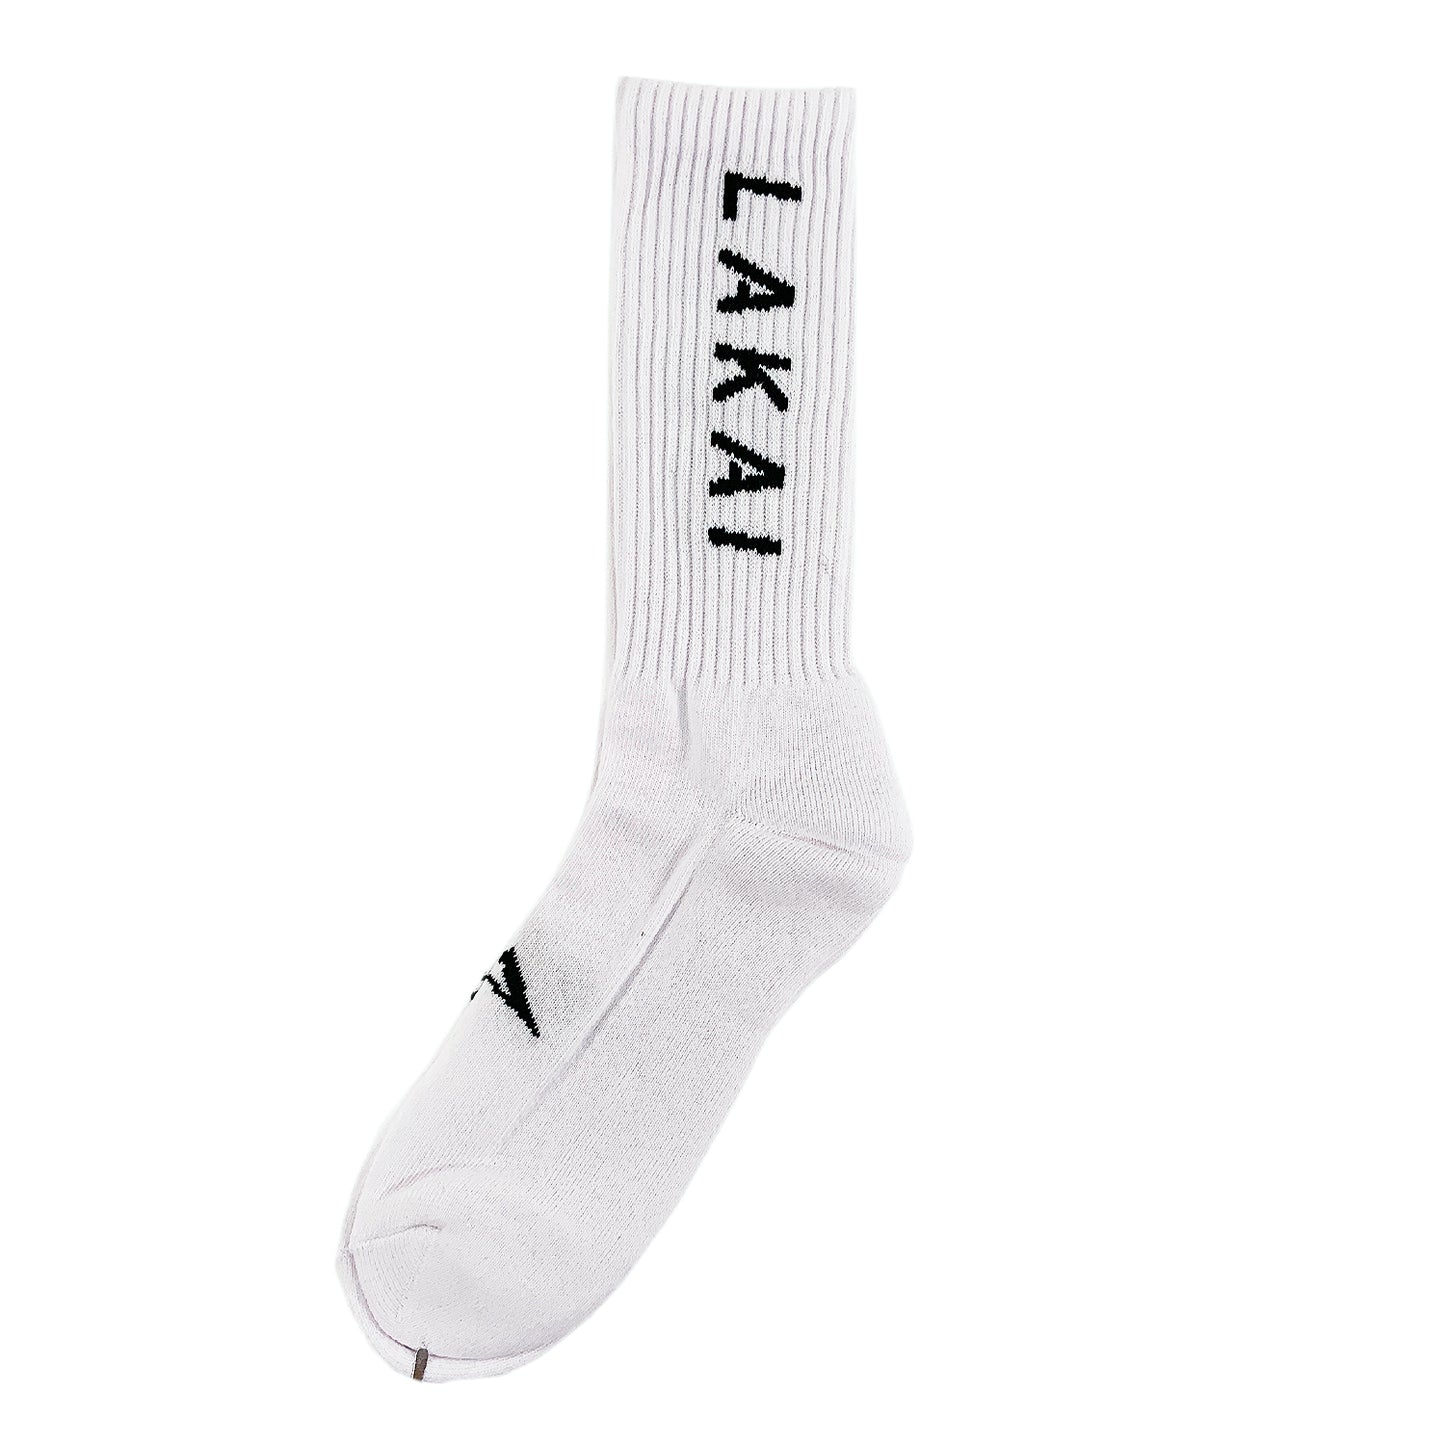 Lakai Simple Crew Socks - White - Prime Delux Store